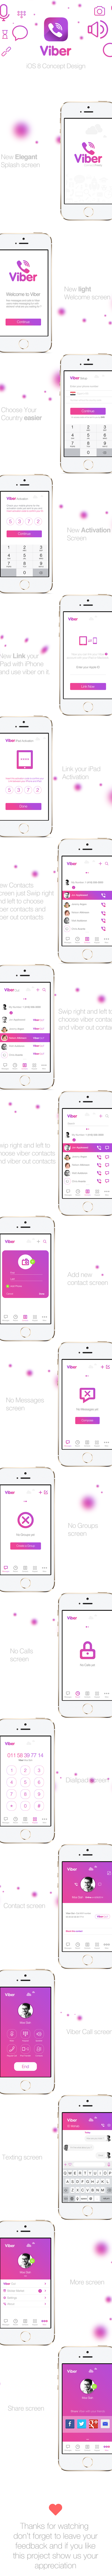 Viber App UI/UX Redesign for iOS 8